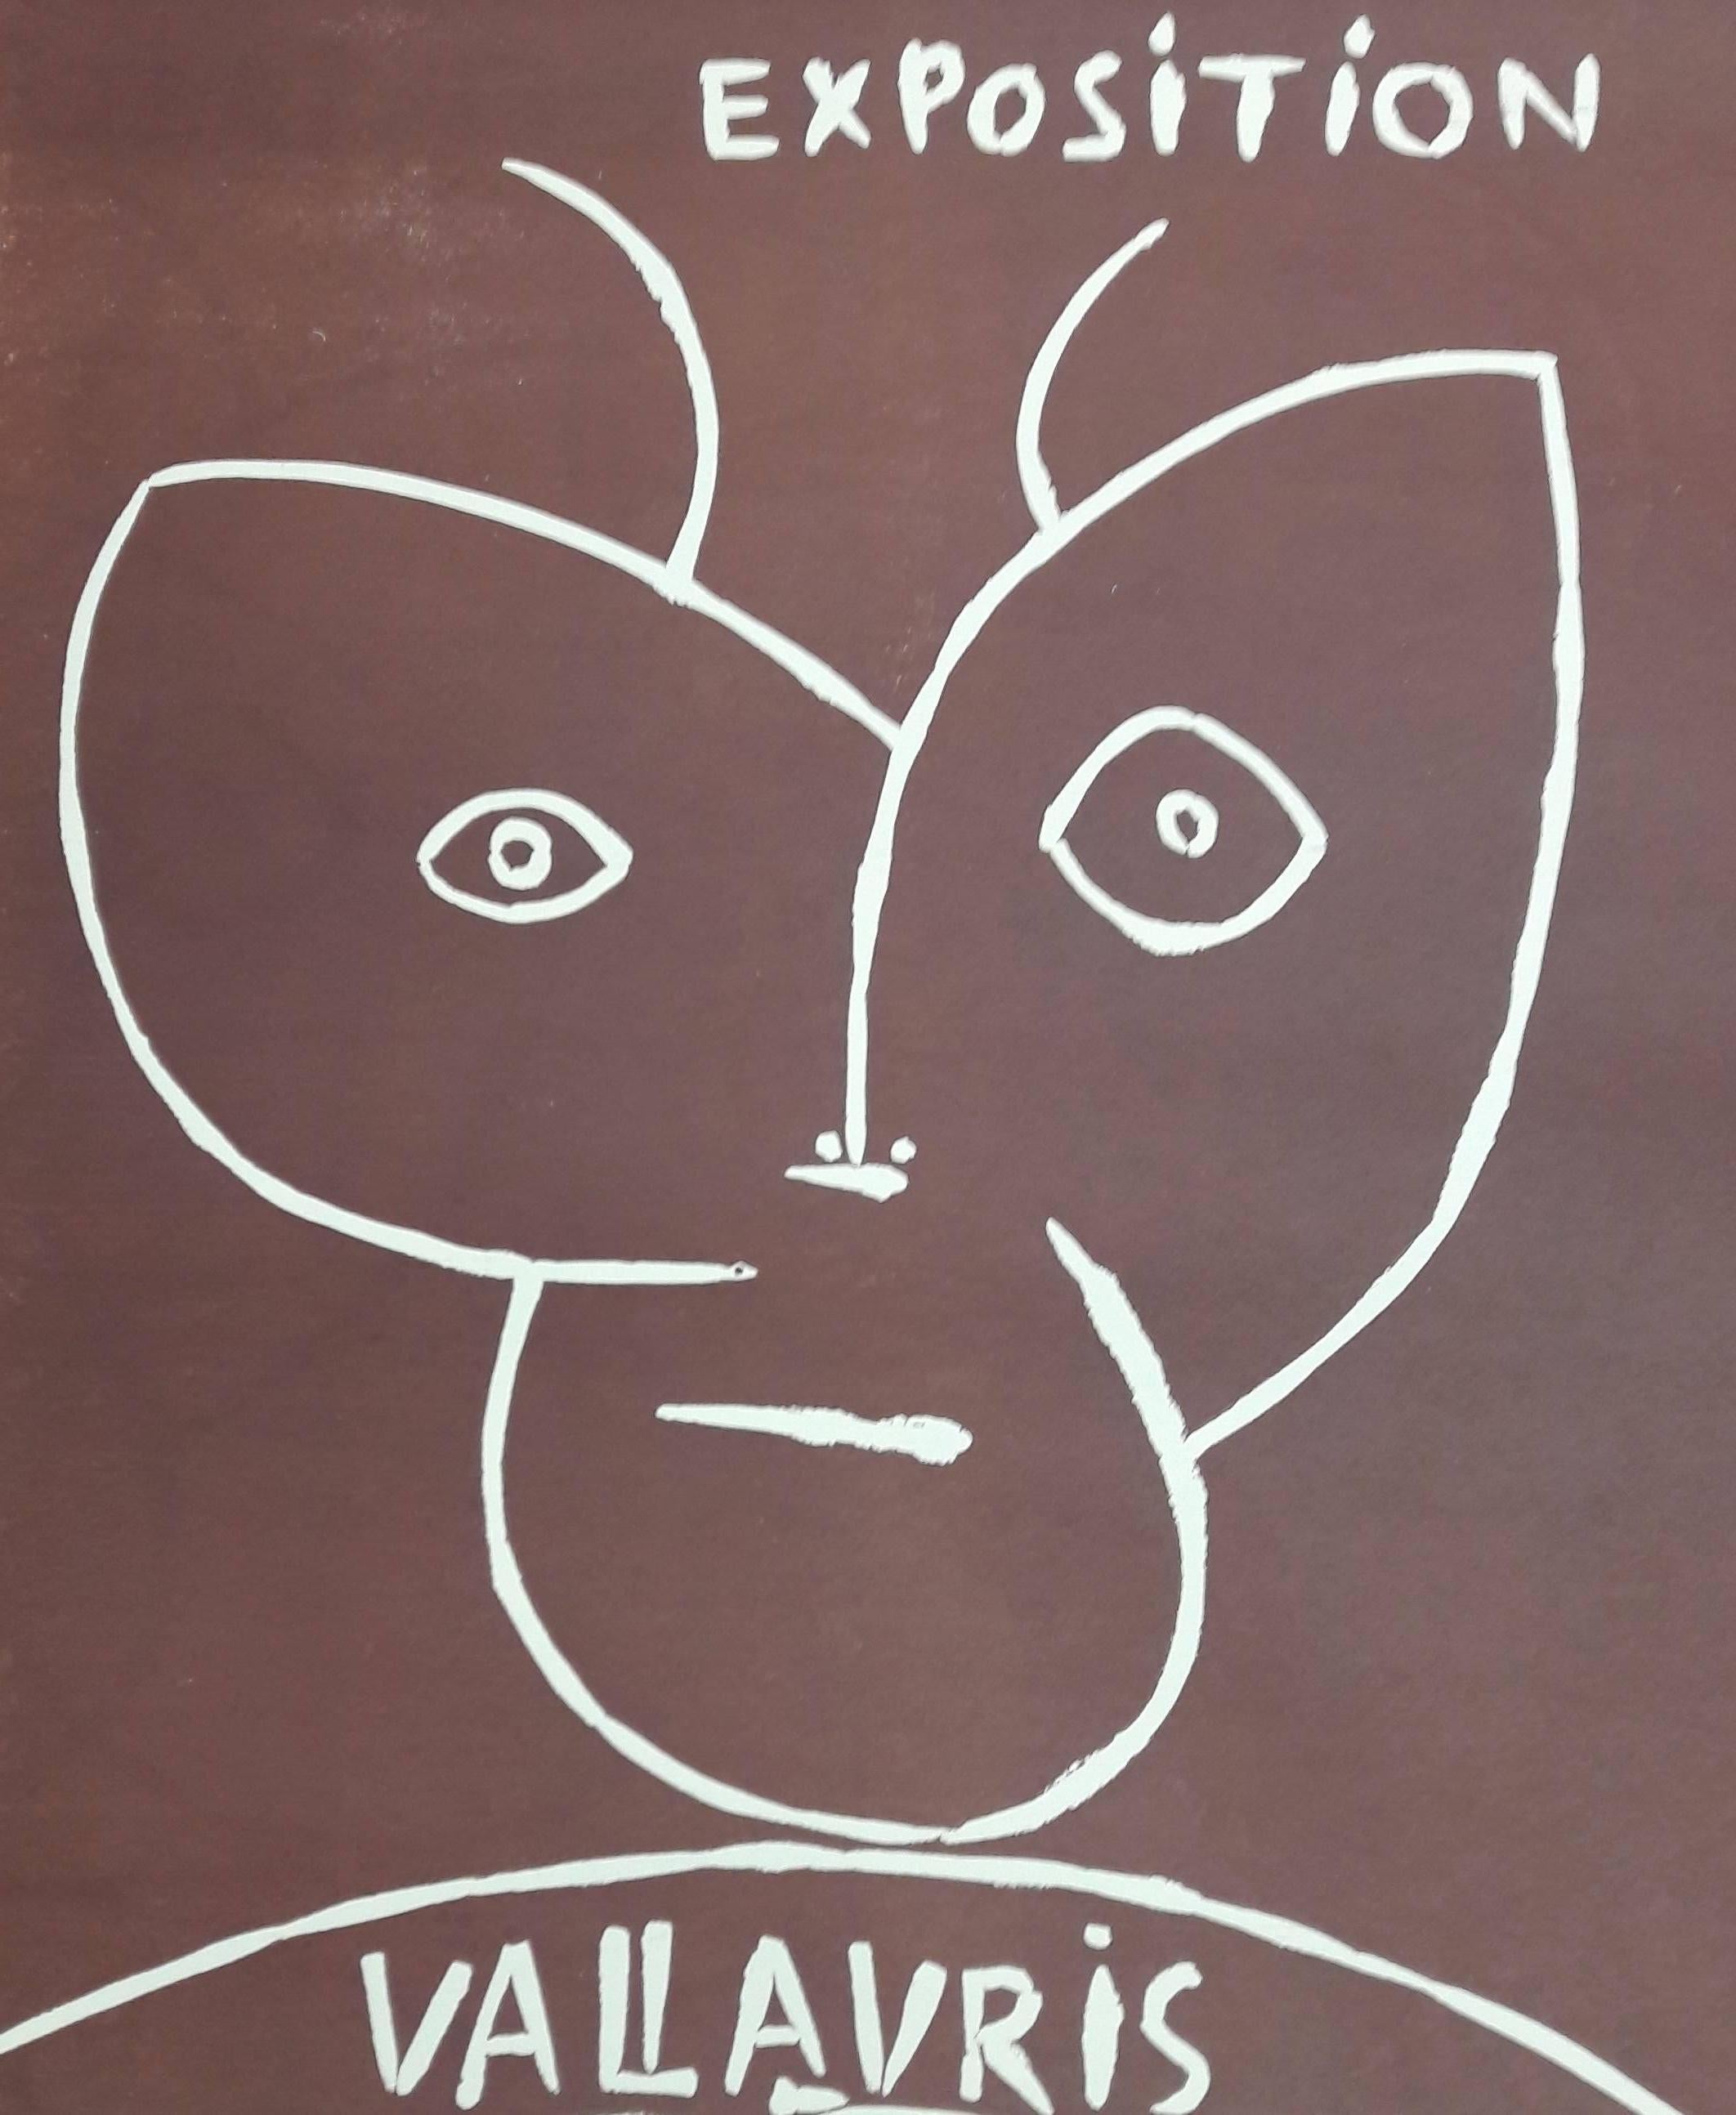 Exposition Vallauris 1955 - Original Linocut - Print by Pablo Picasso